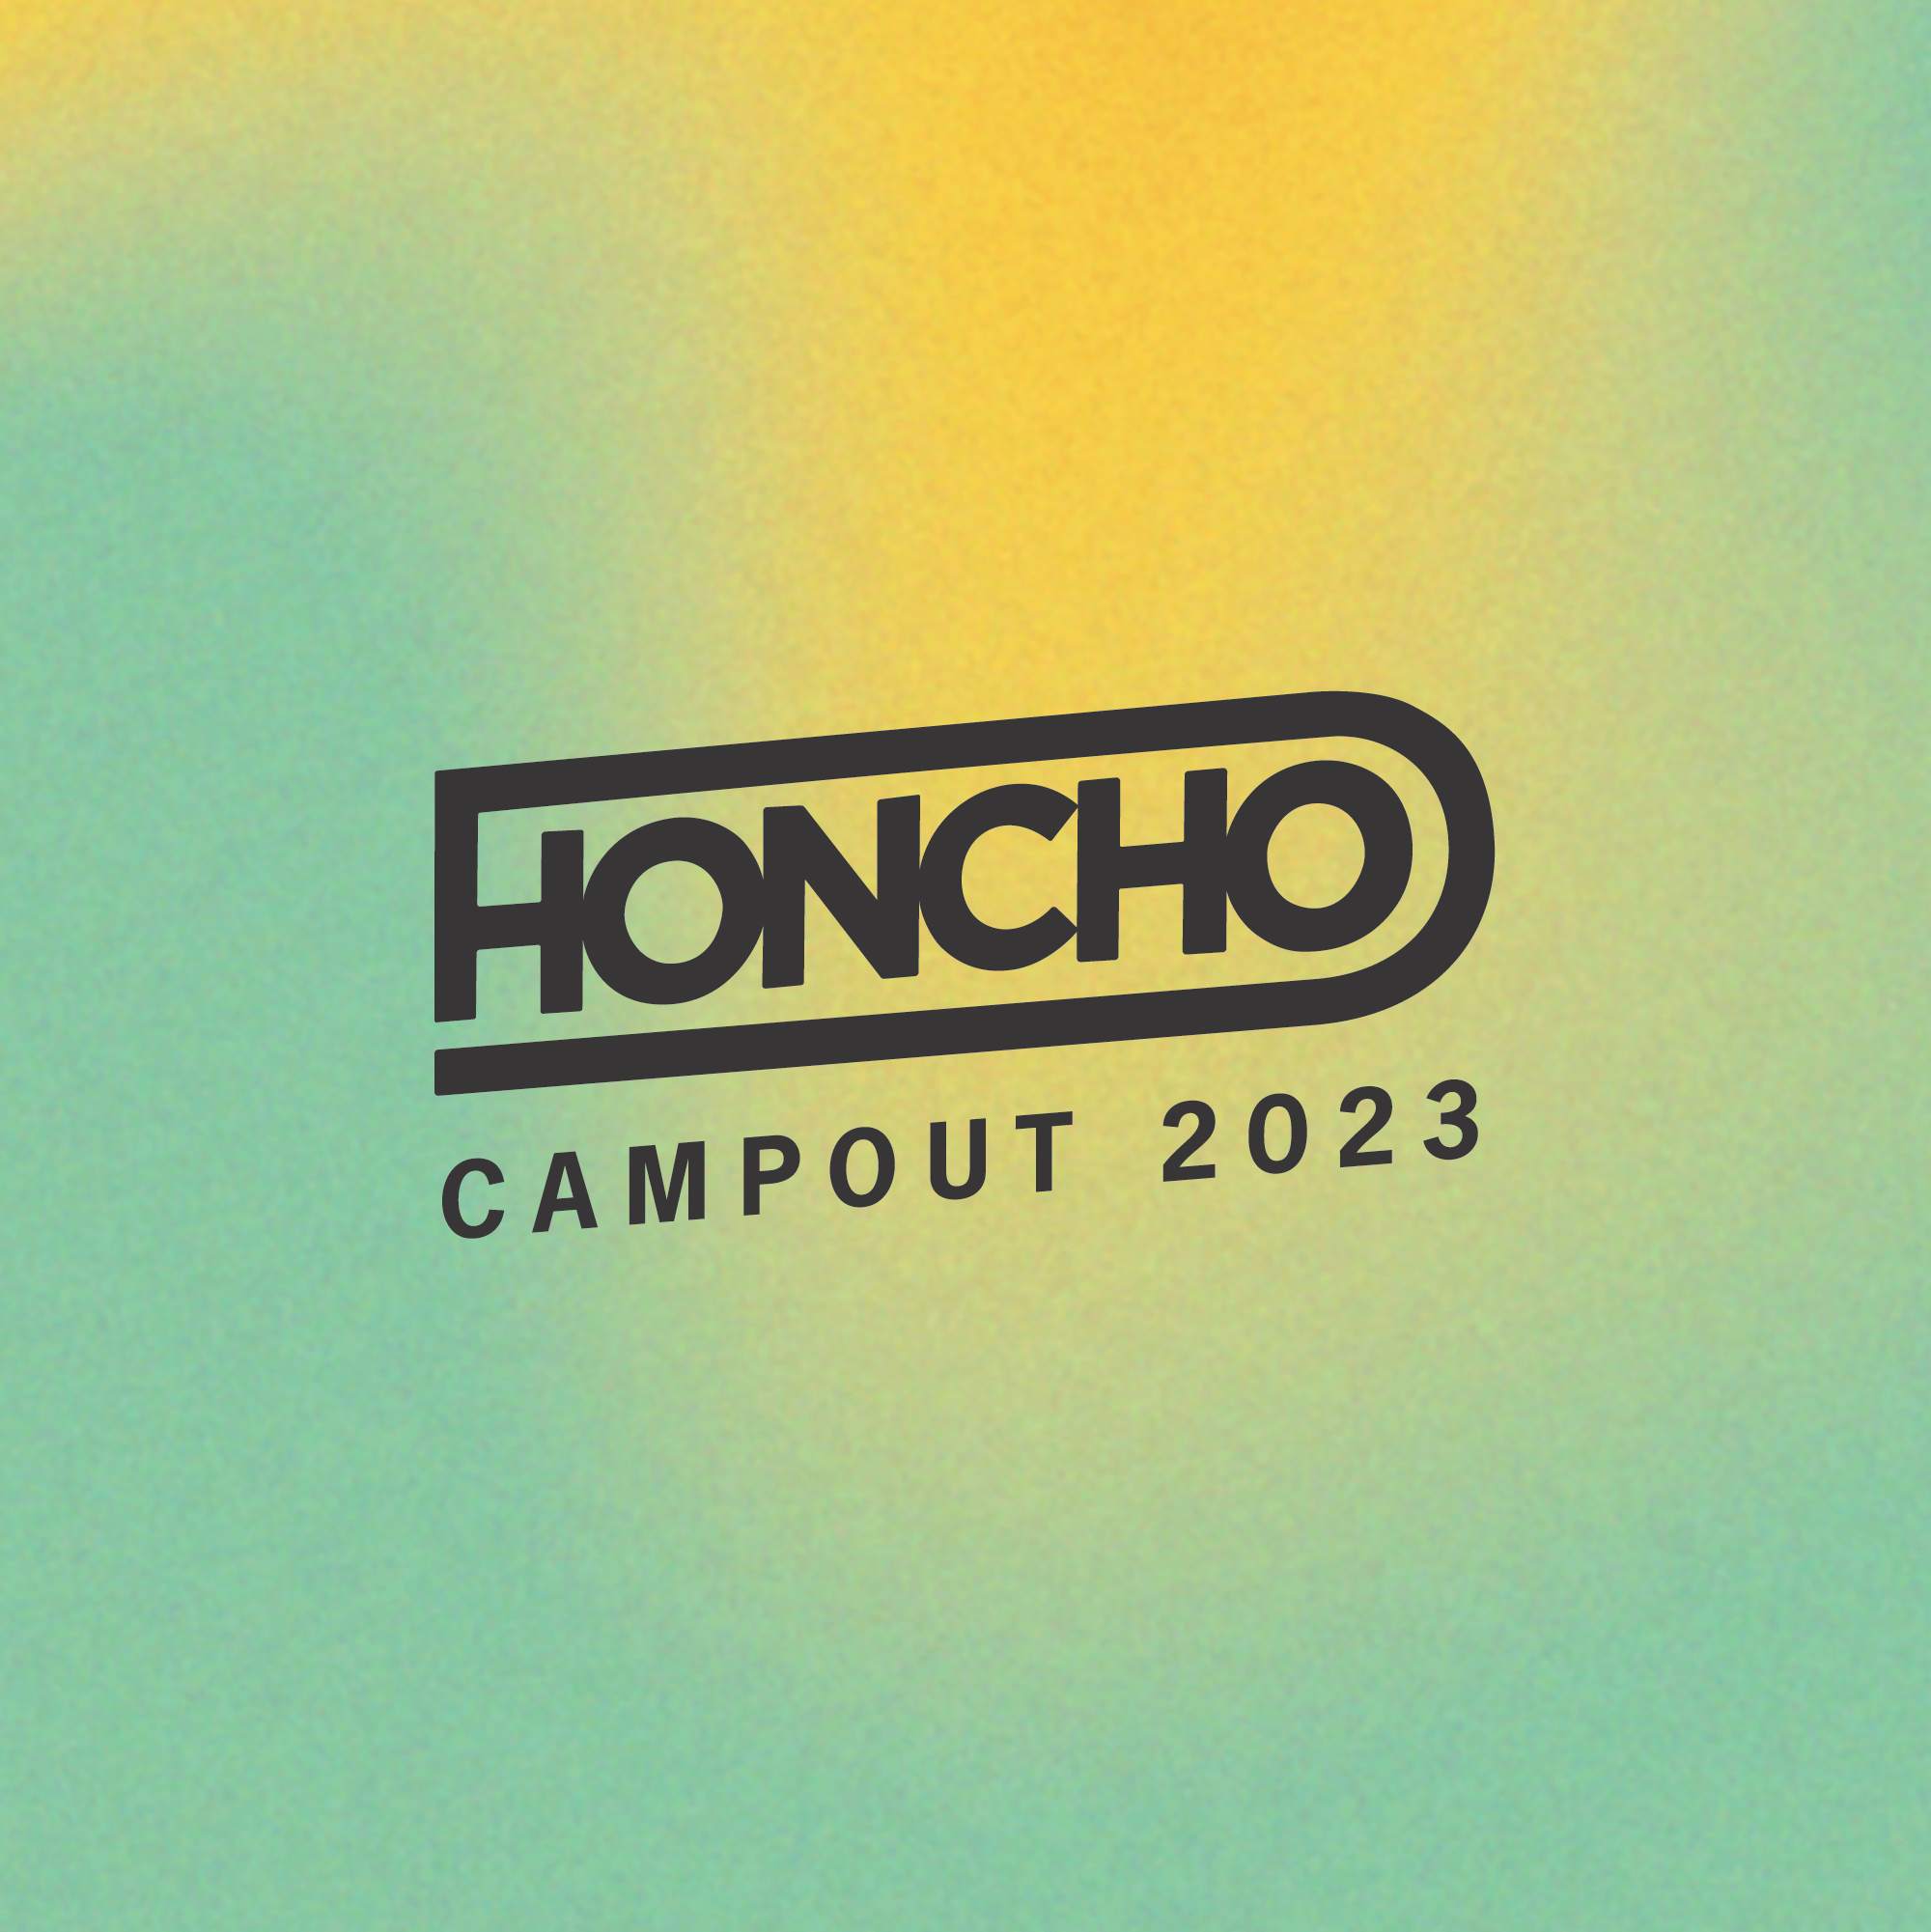 Honcho Campout 2023 - フライヤー表